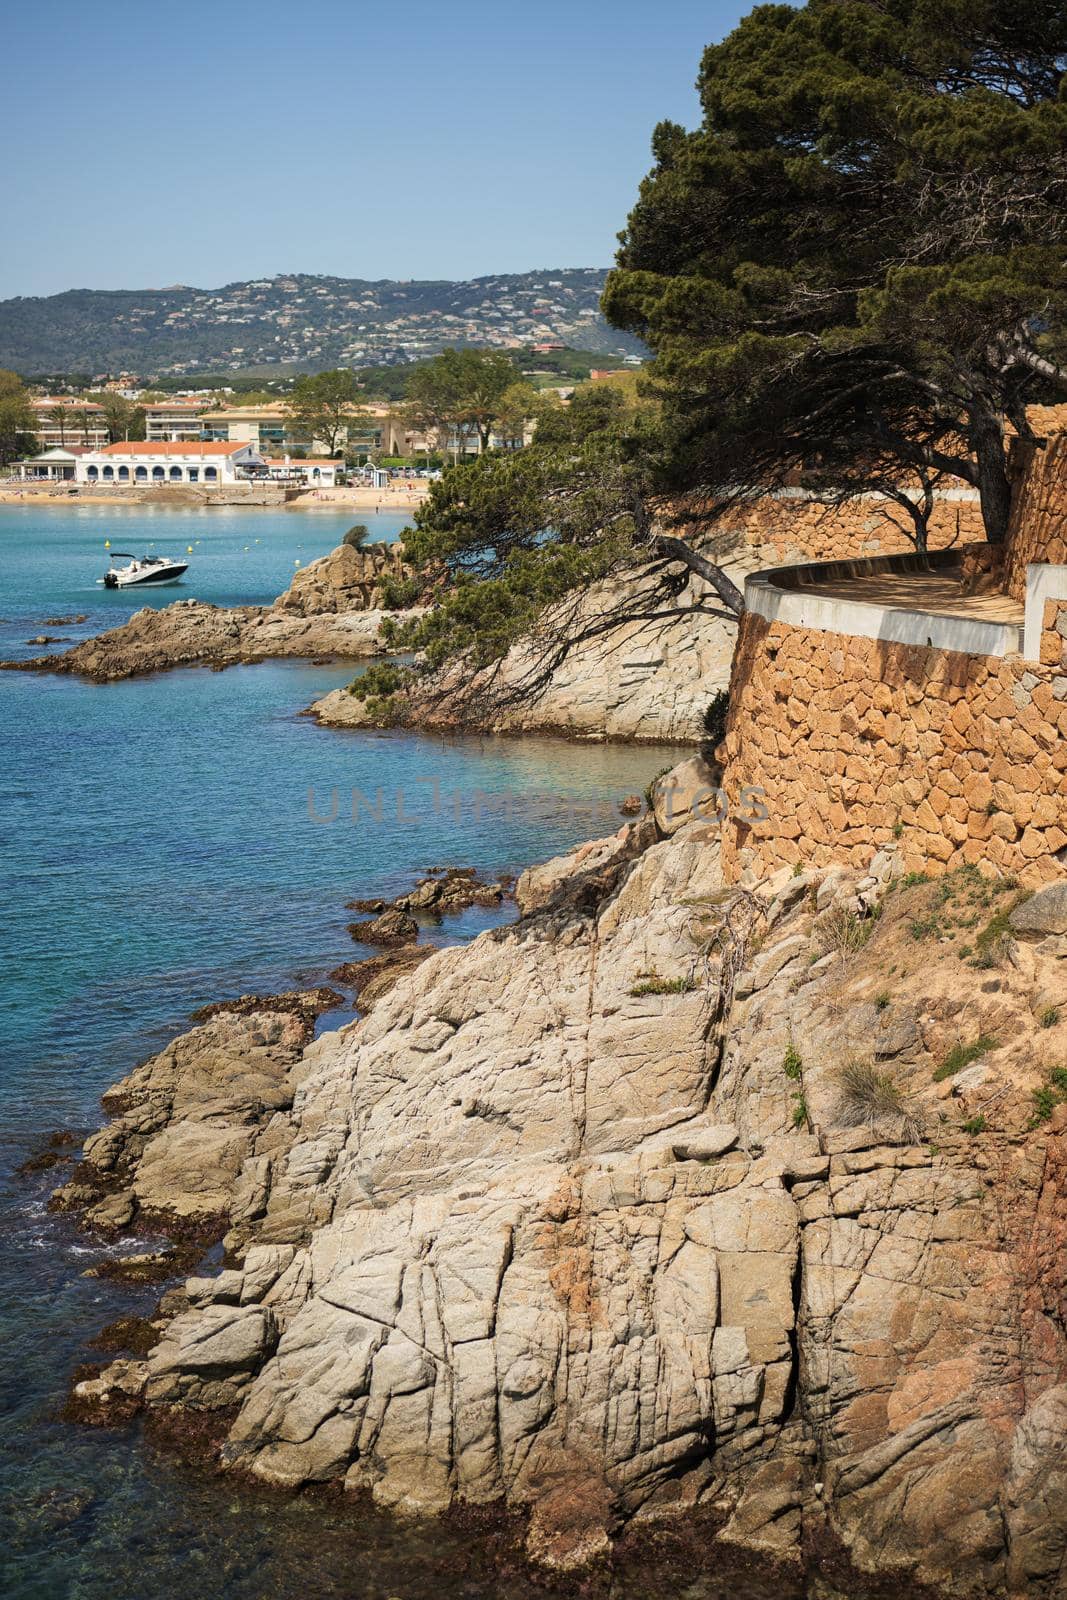 Beautiful shore of mediterranean sea. Cami de Ronda track of Costa Brava Catalonia Spain.